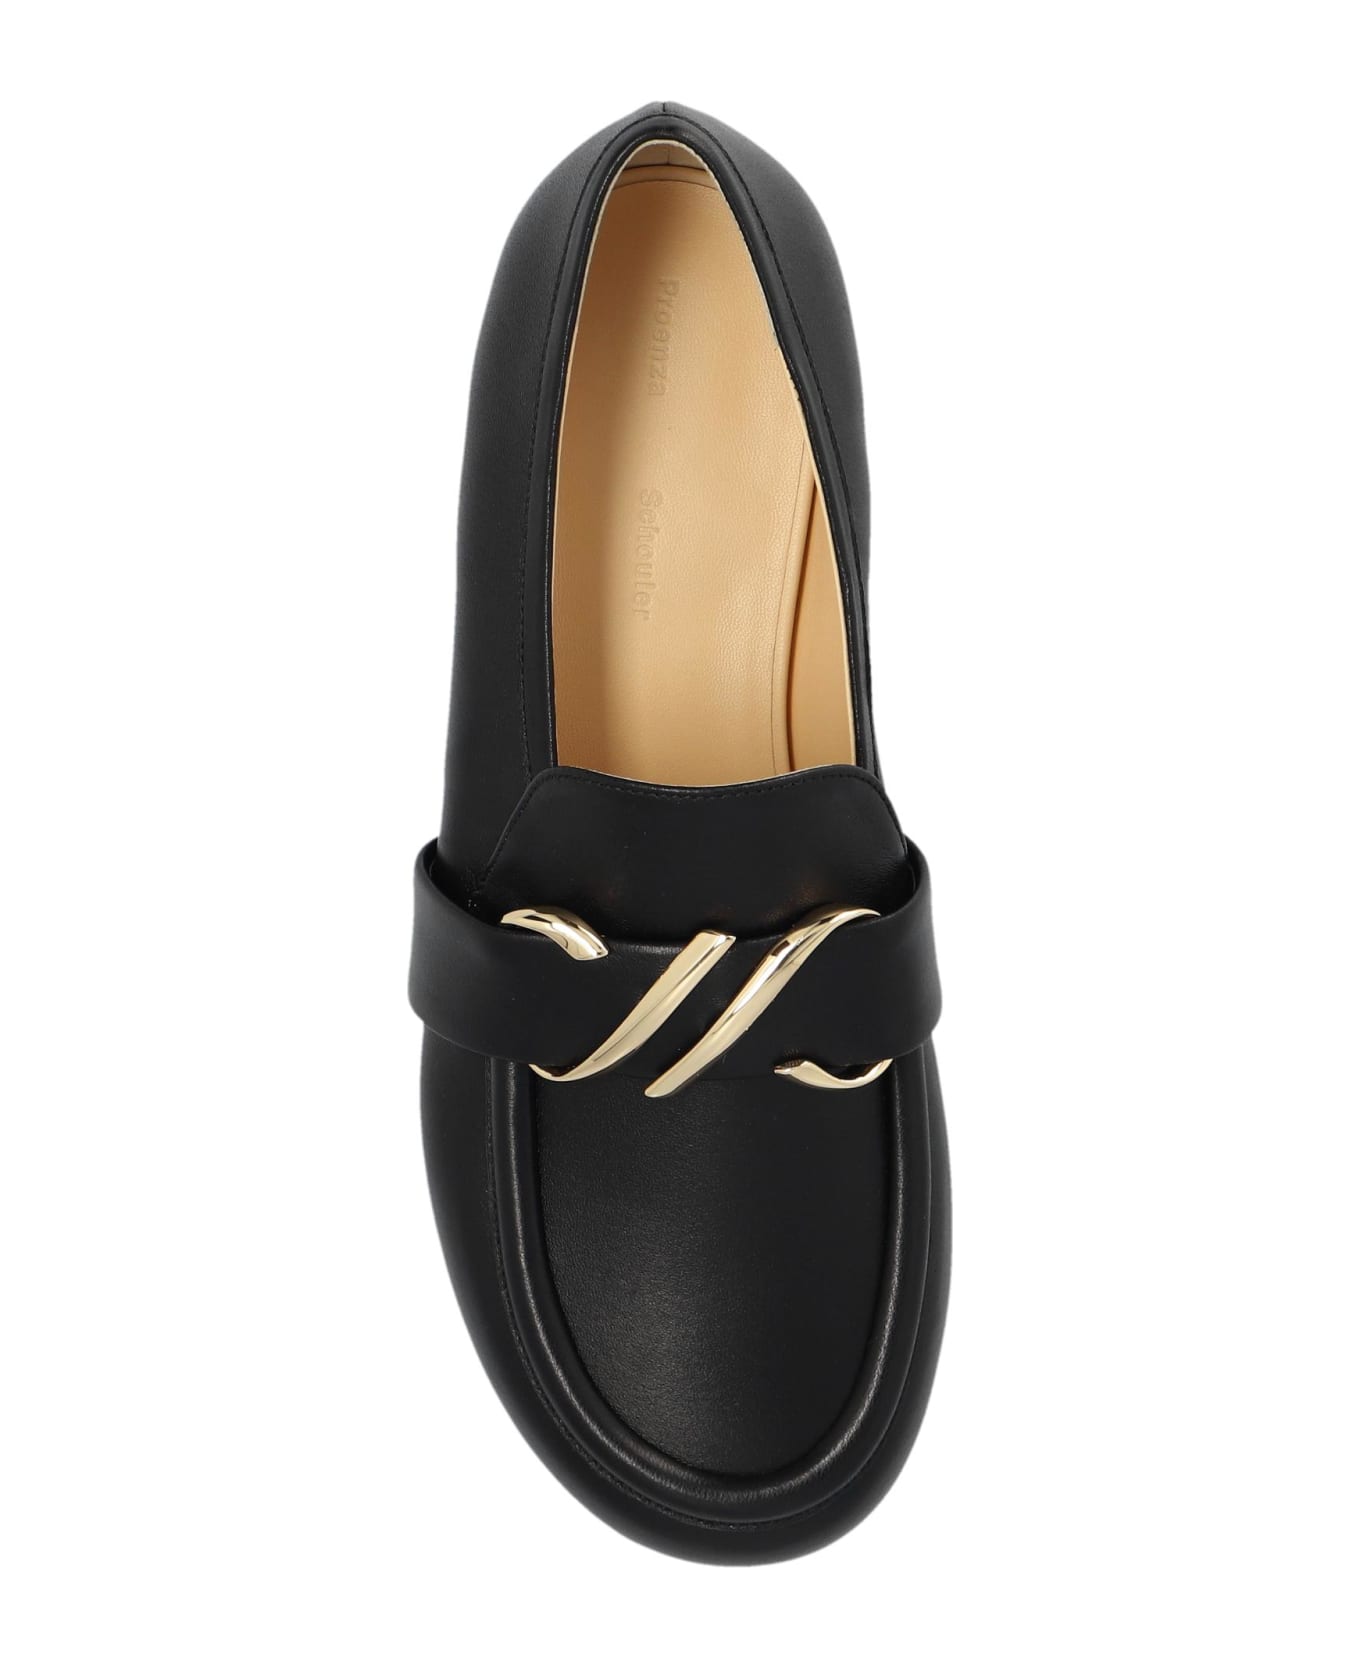 Proenza Schouler Leather Shoes - Black